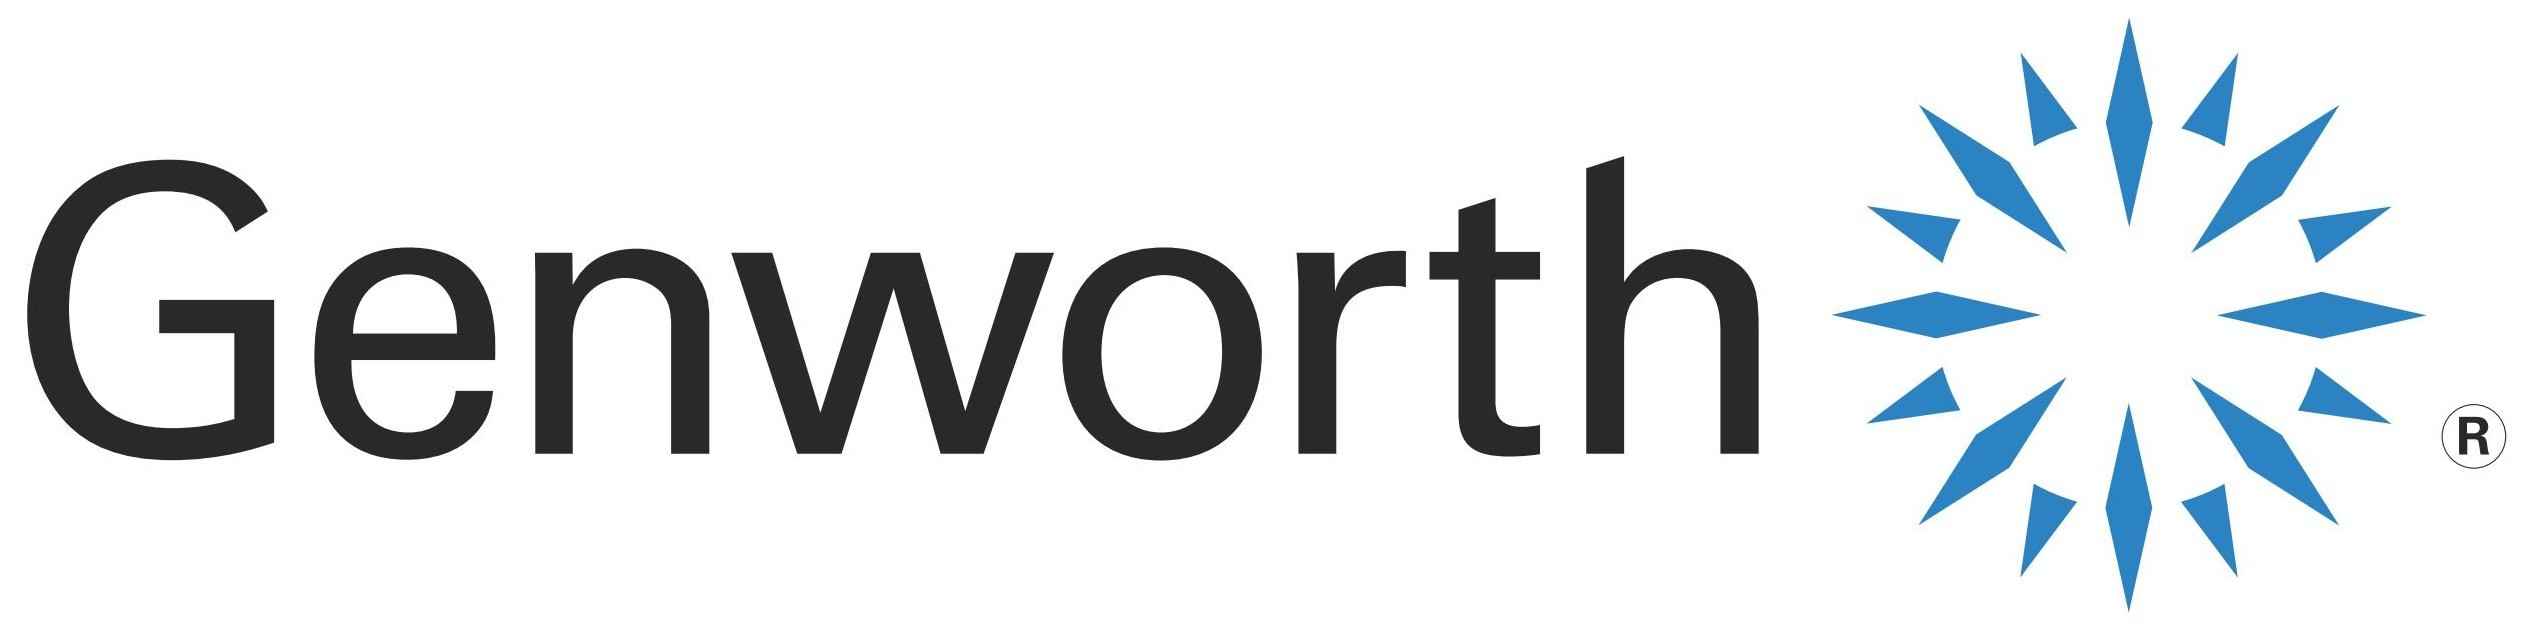 Genworth Financial Logo [EPS File]